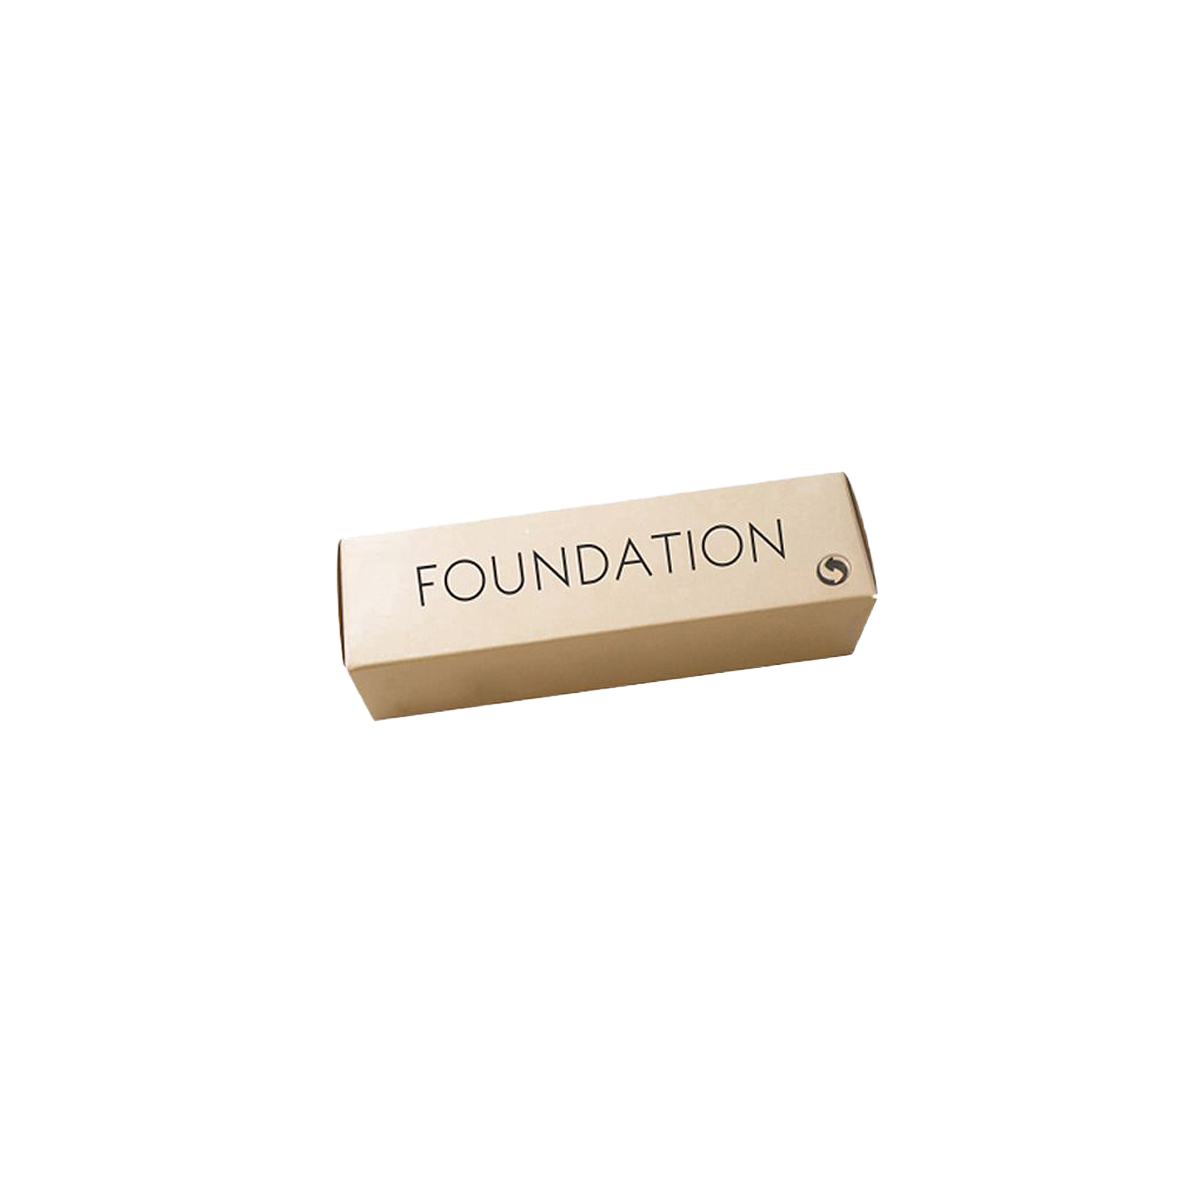 Custom Foundation Boxes